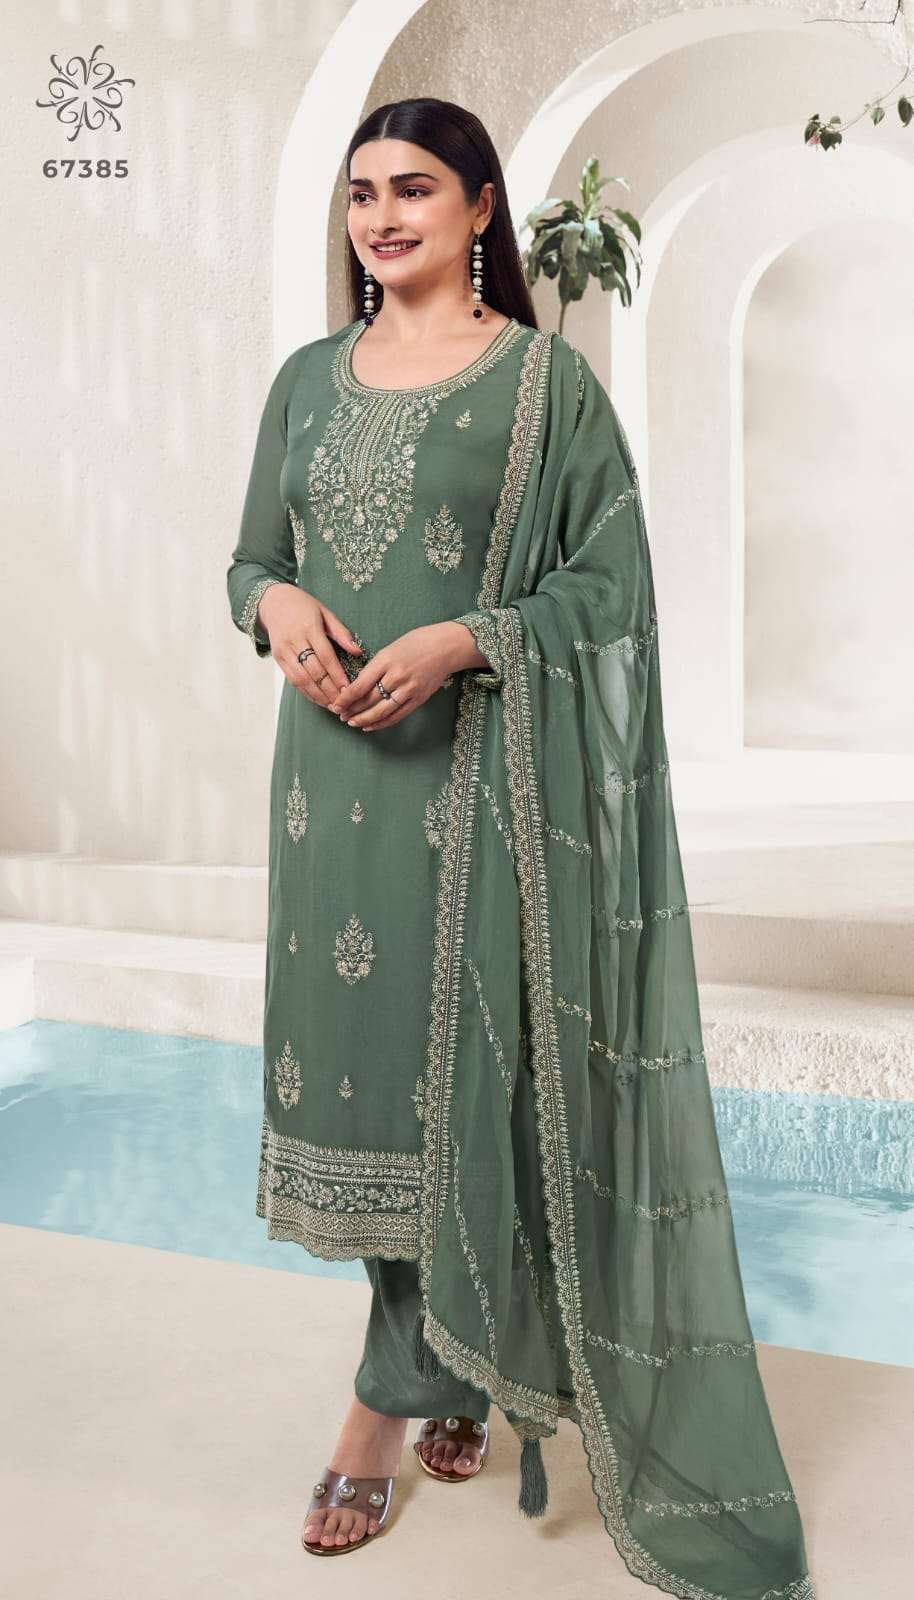 vinay fashion kuleesh chakori organza decent look salwar suit catalog